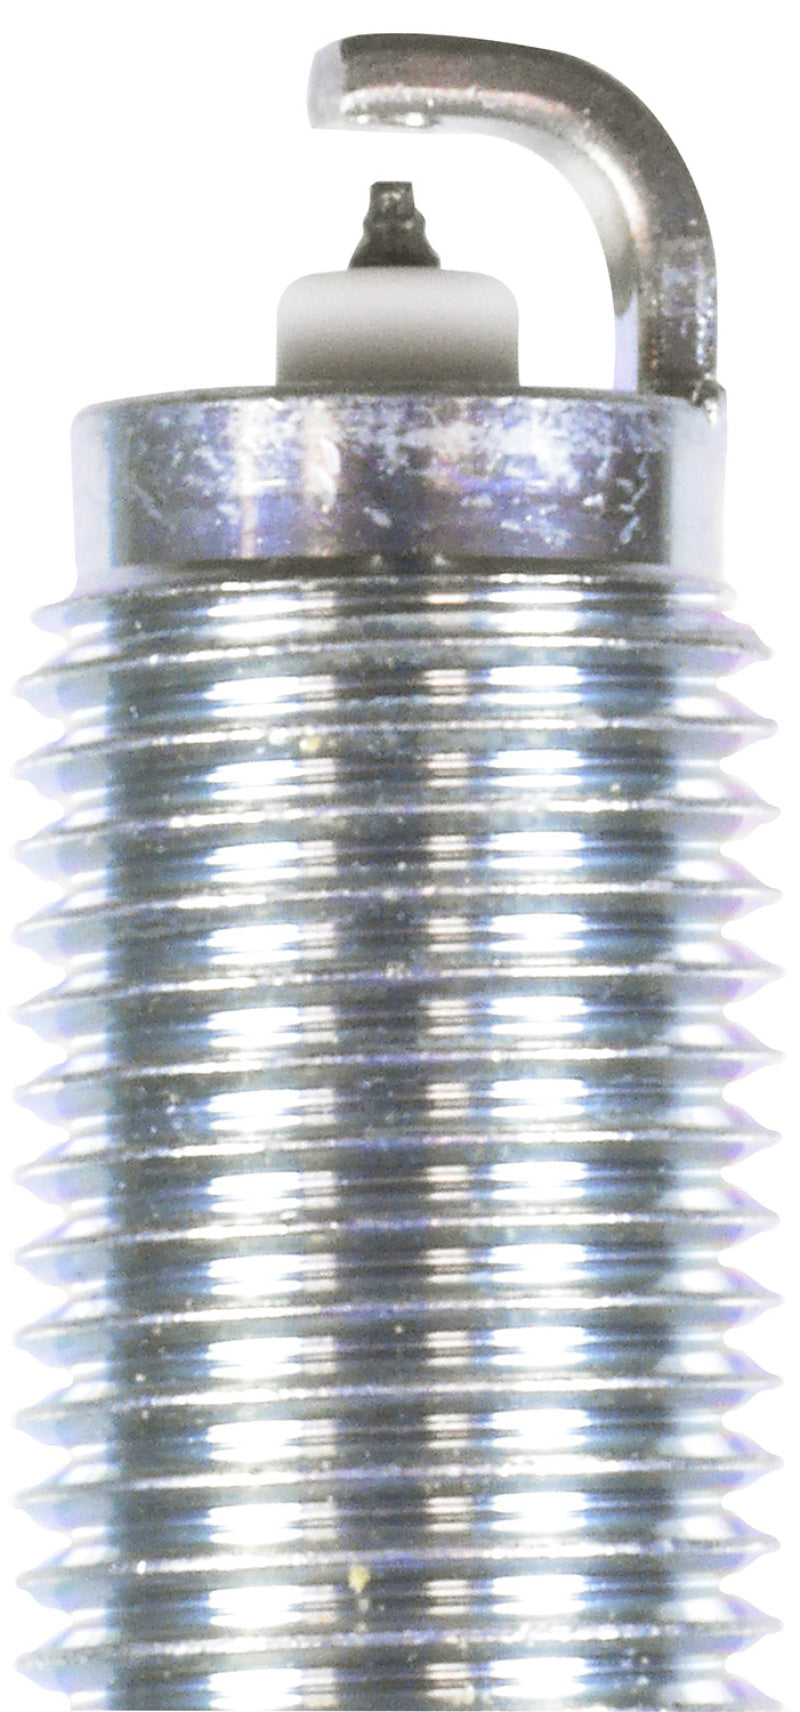 NGK - Laser Iridium Spark Plug Box of 4 (ILZKAR8H8S)